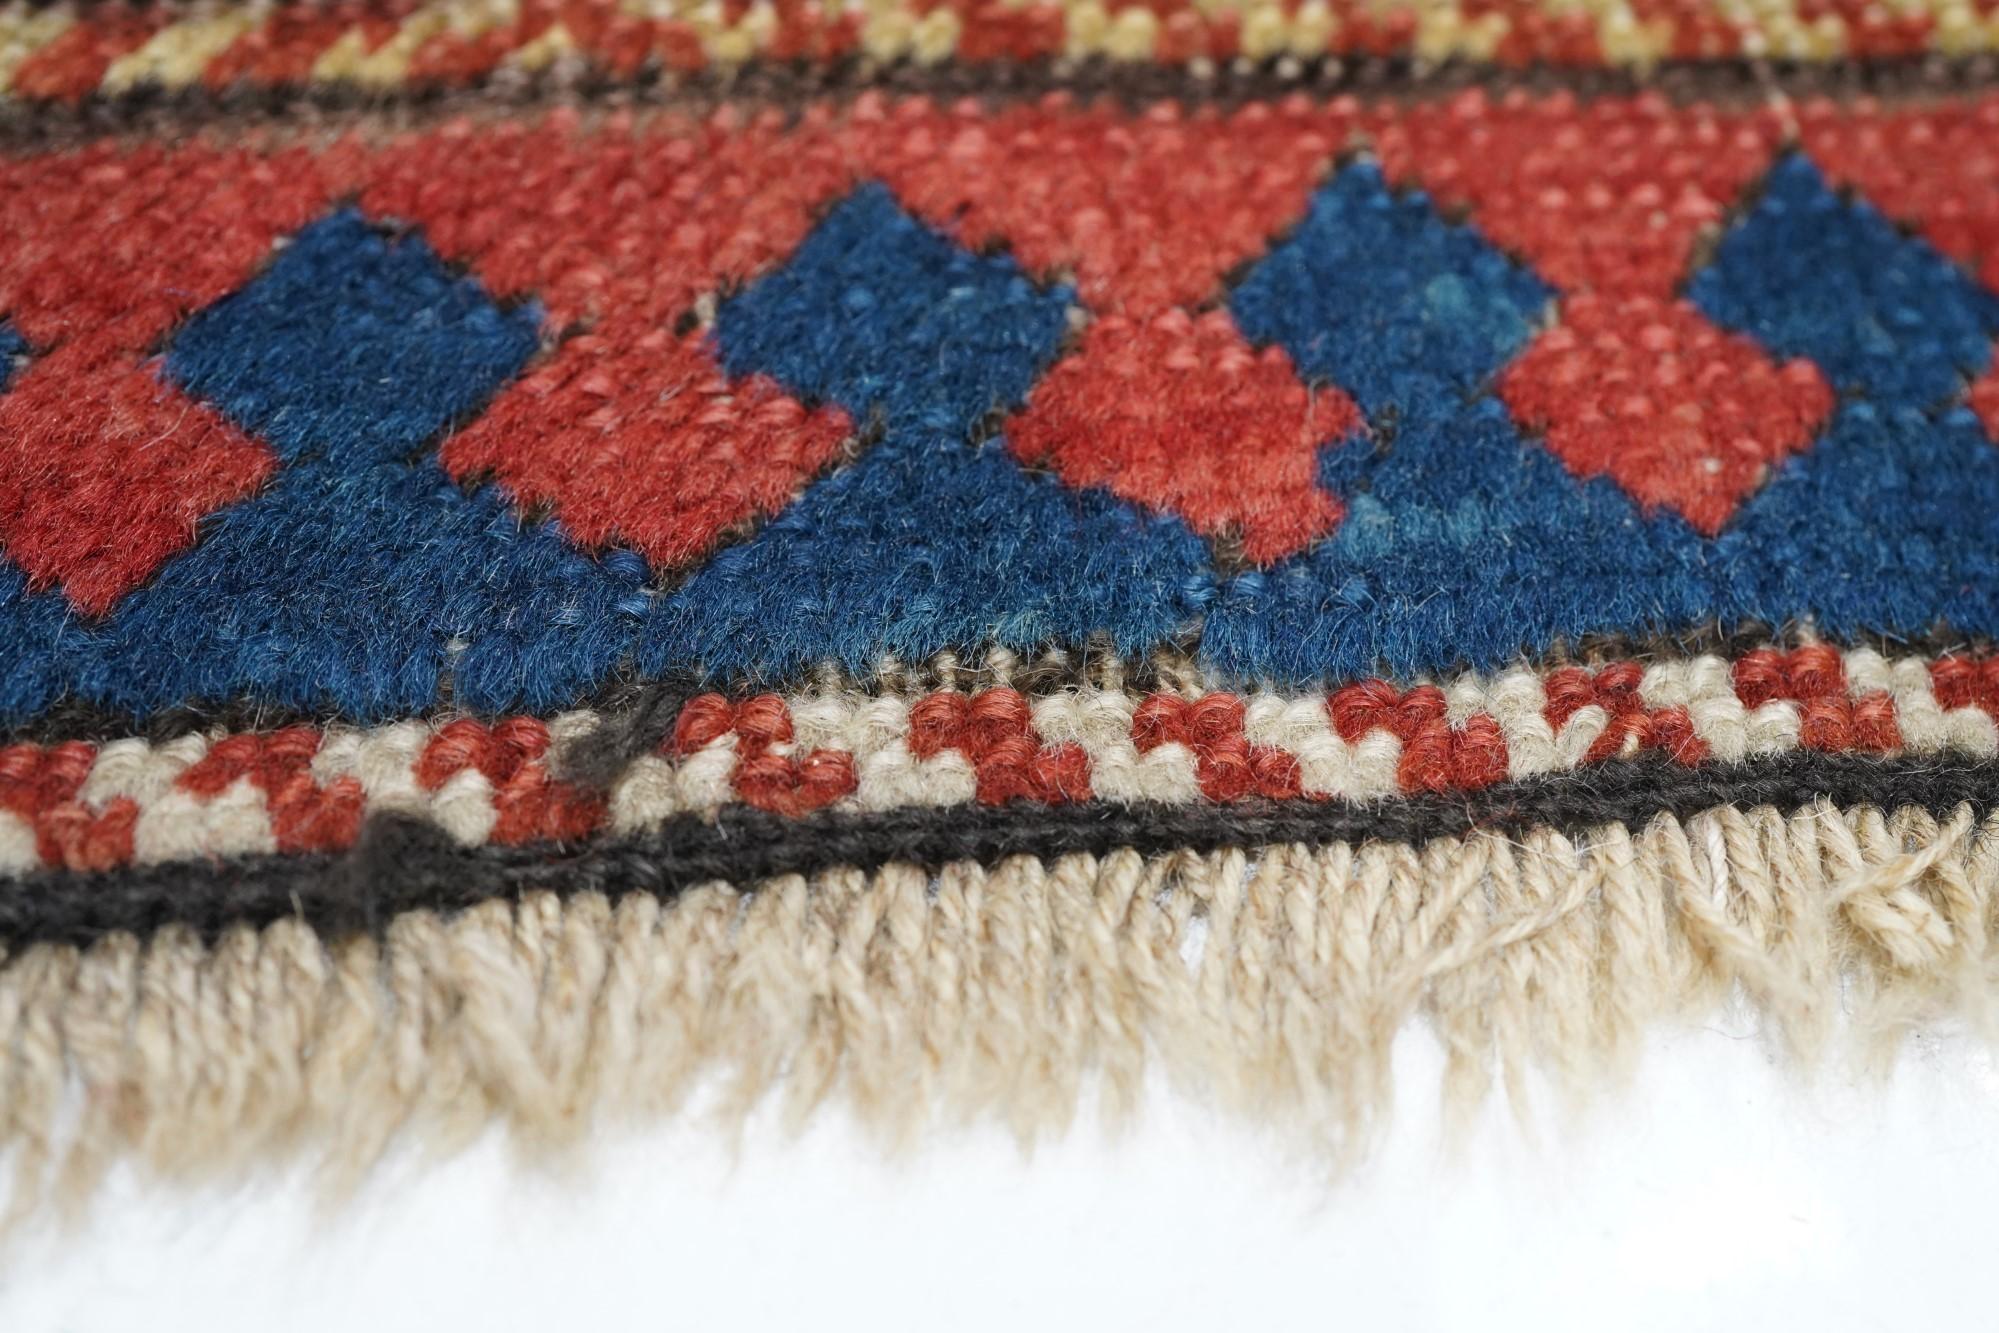 Late 19th Century Antique Kazak Rug For Sale